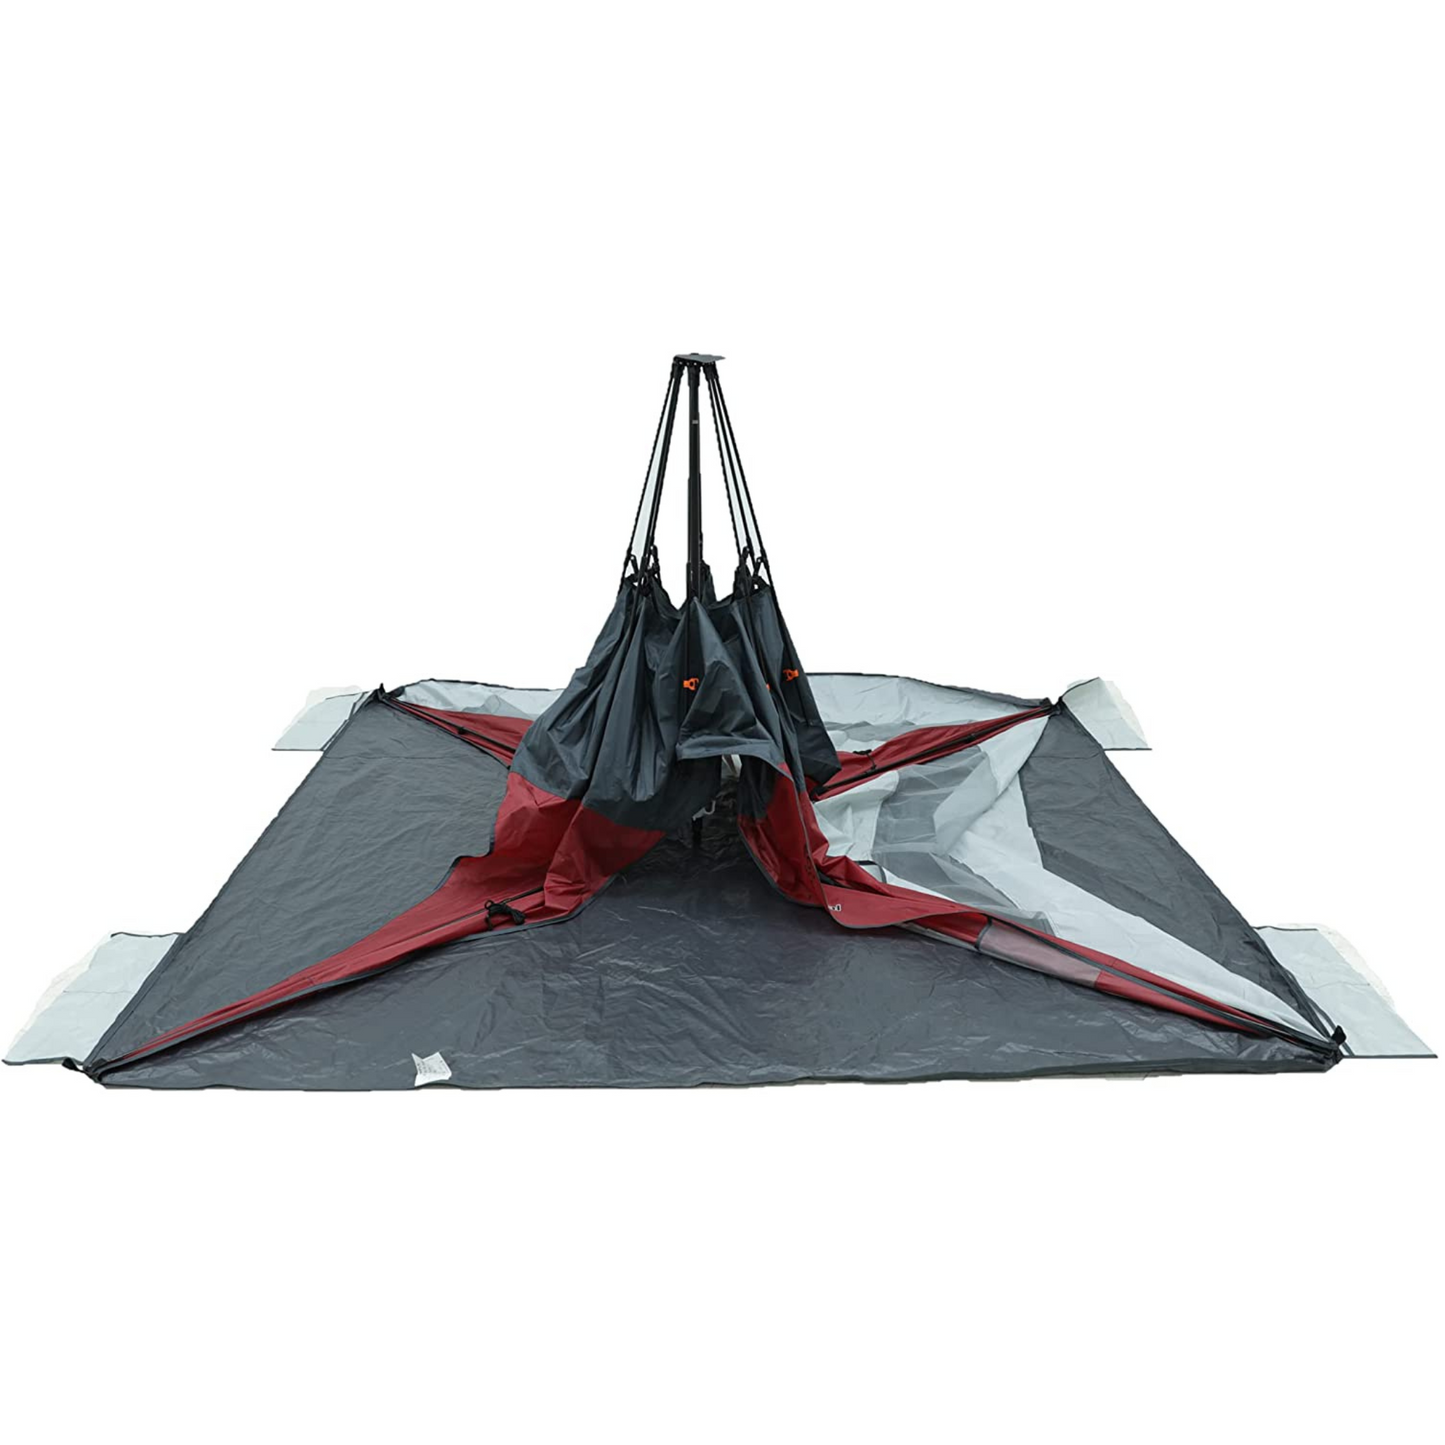 Portal® 8' x 8' Instant Setup Sun Shelter, Red/Black